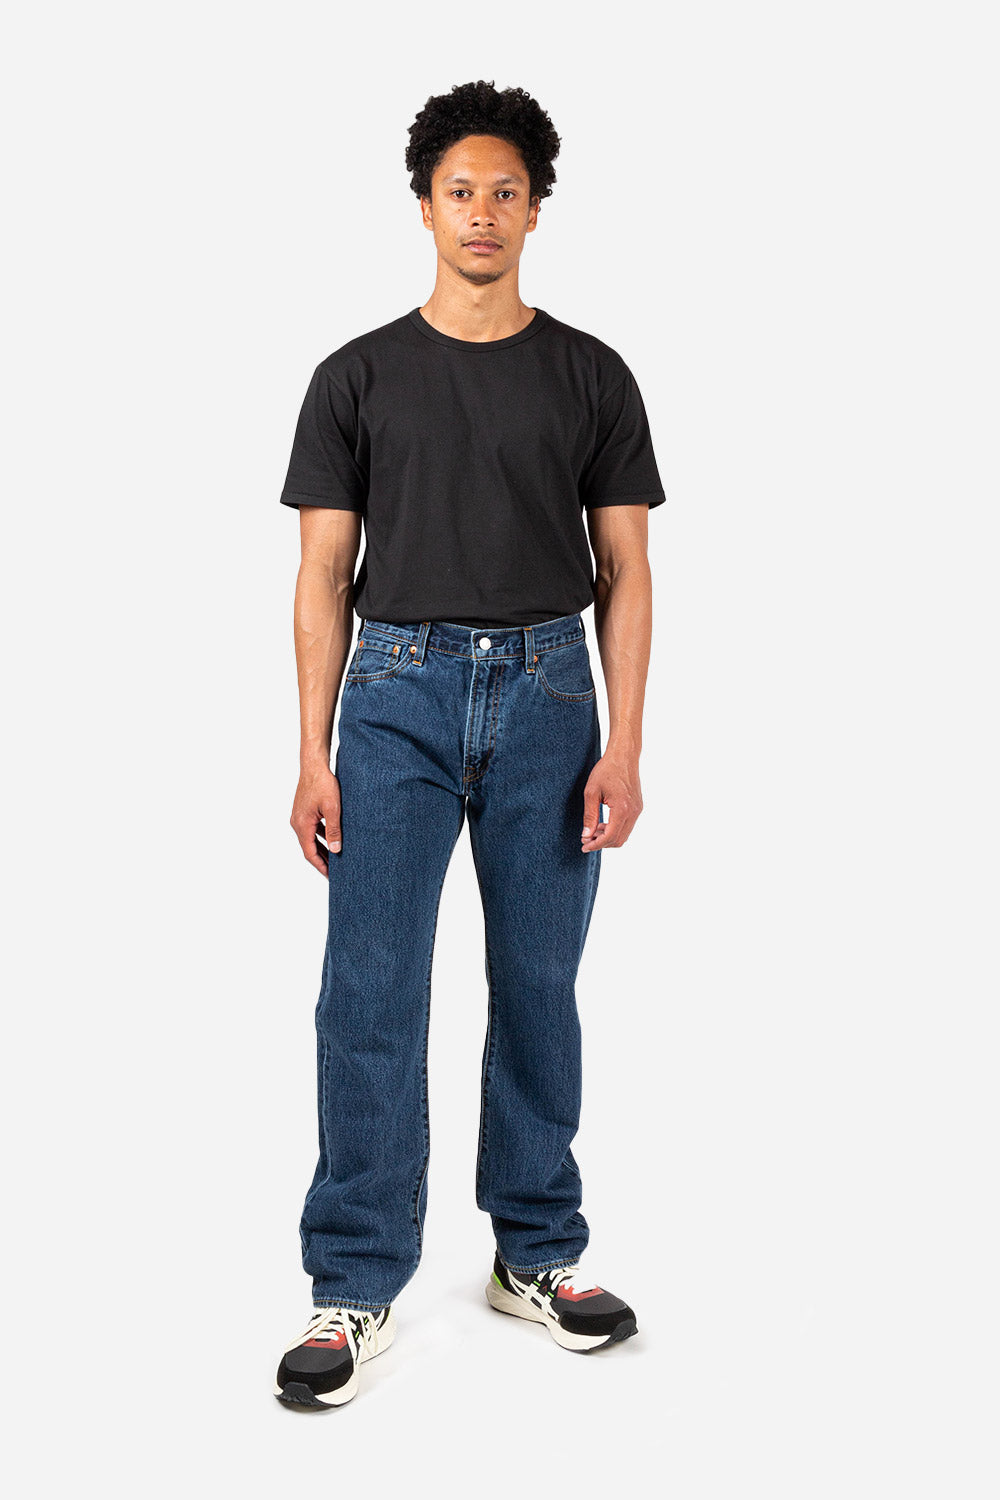 bootcut jeans with jordans